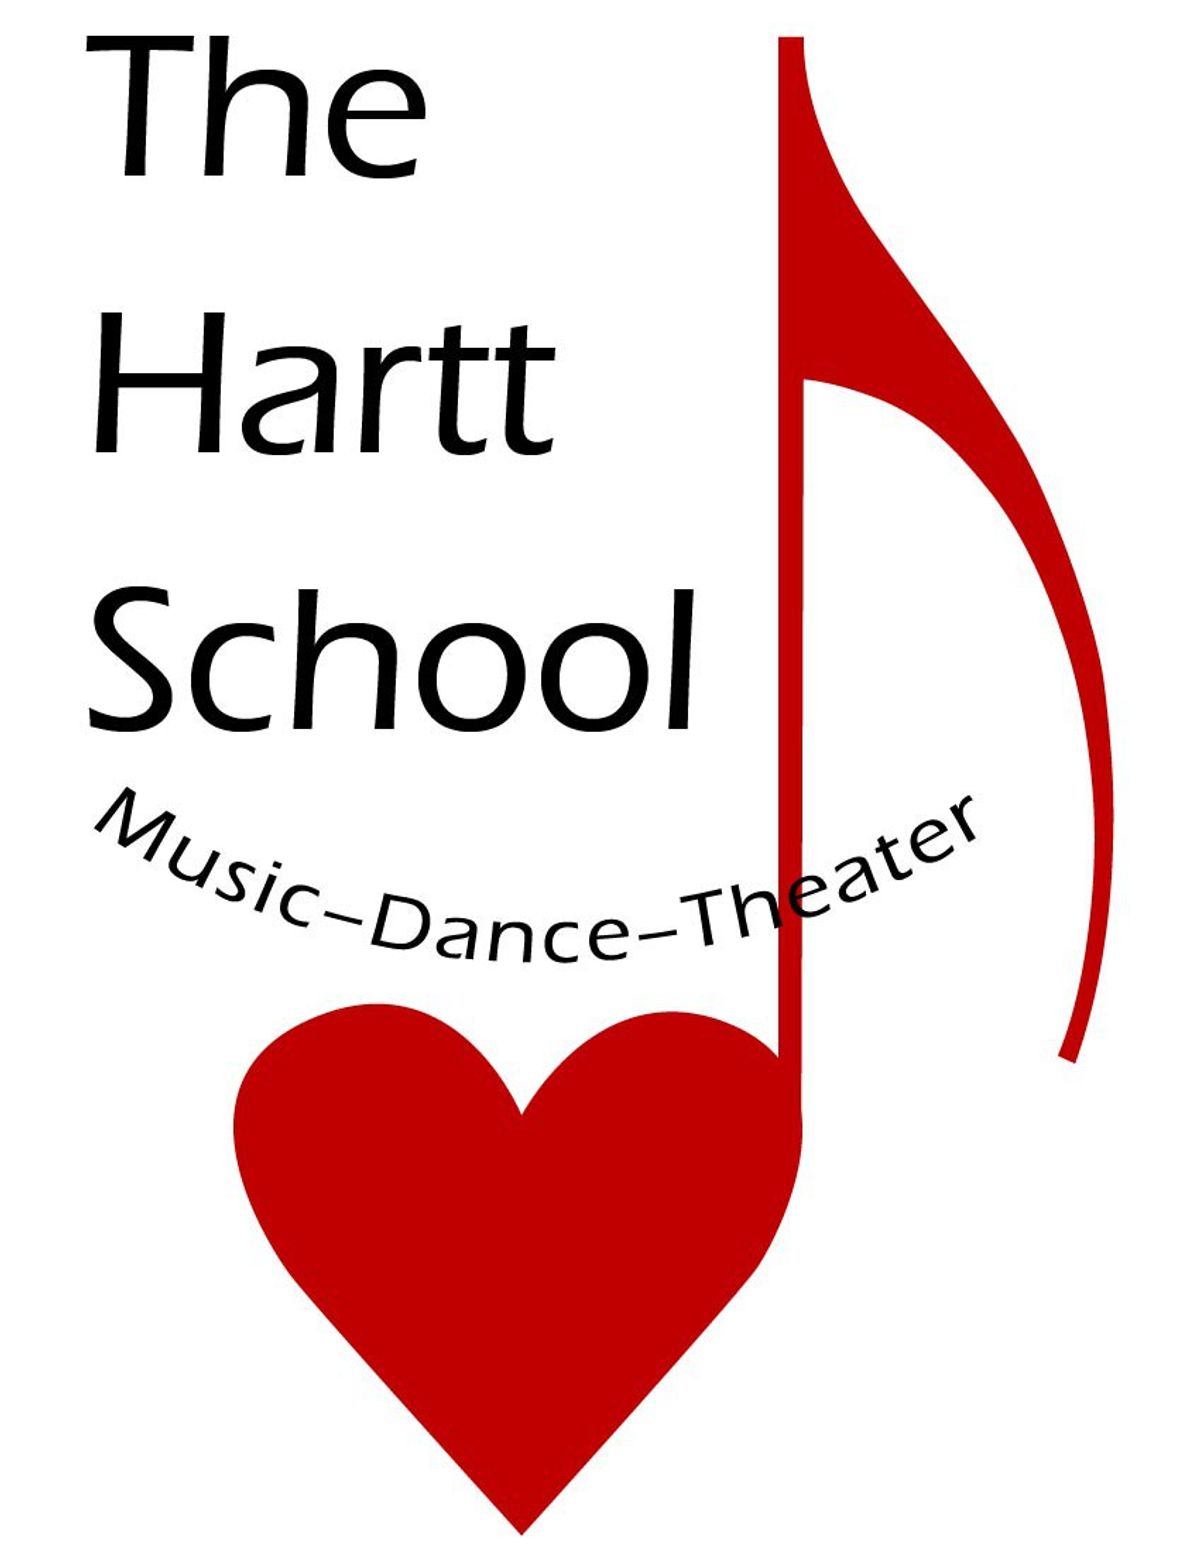 The Hartt School